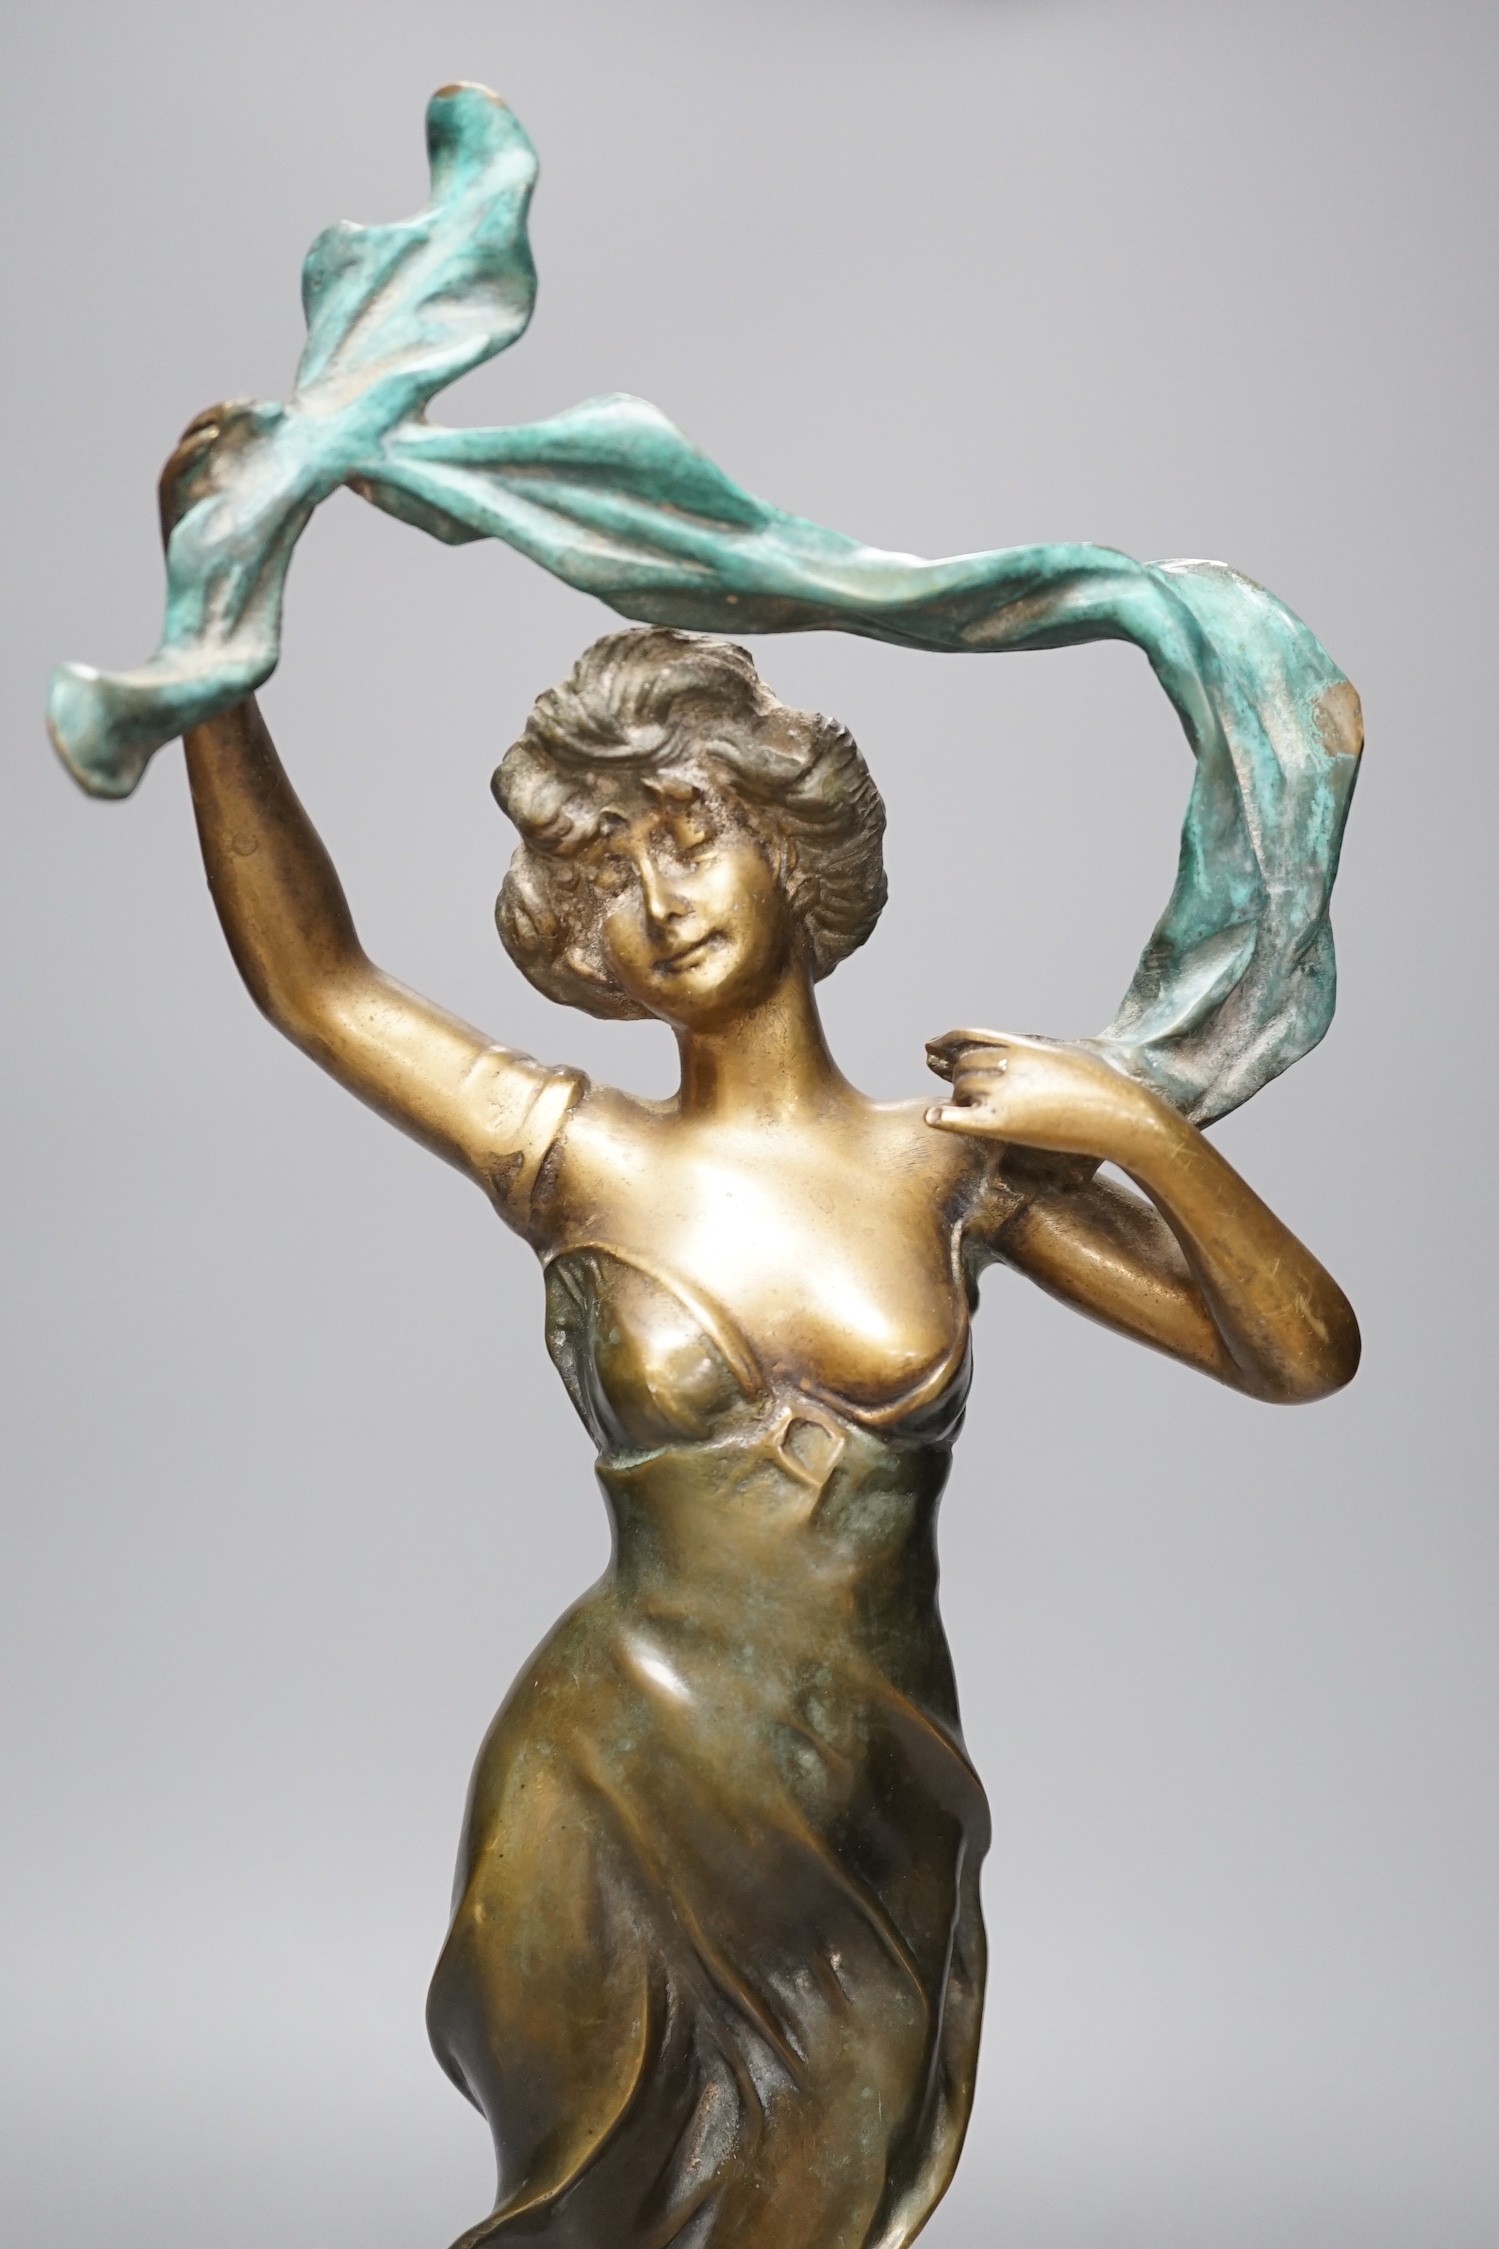 After Paladini, bronze figure titled ‘Zephyr’, apocryphal date 1912, 45.5cm